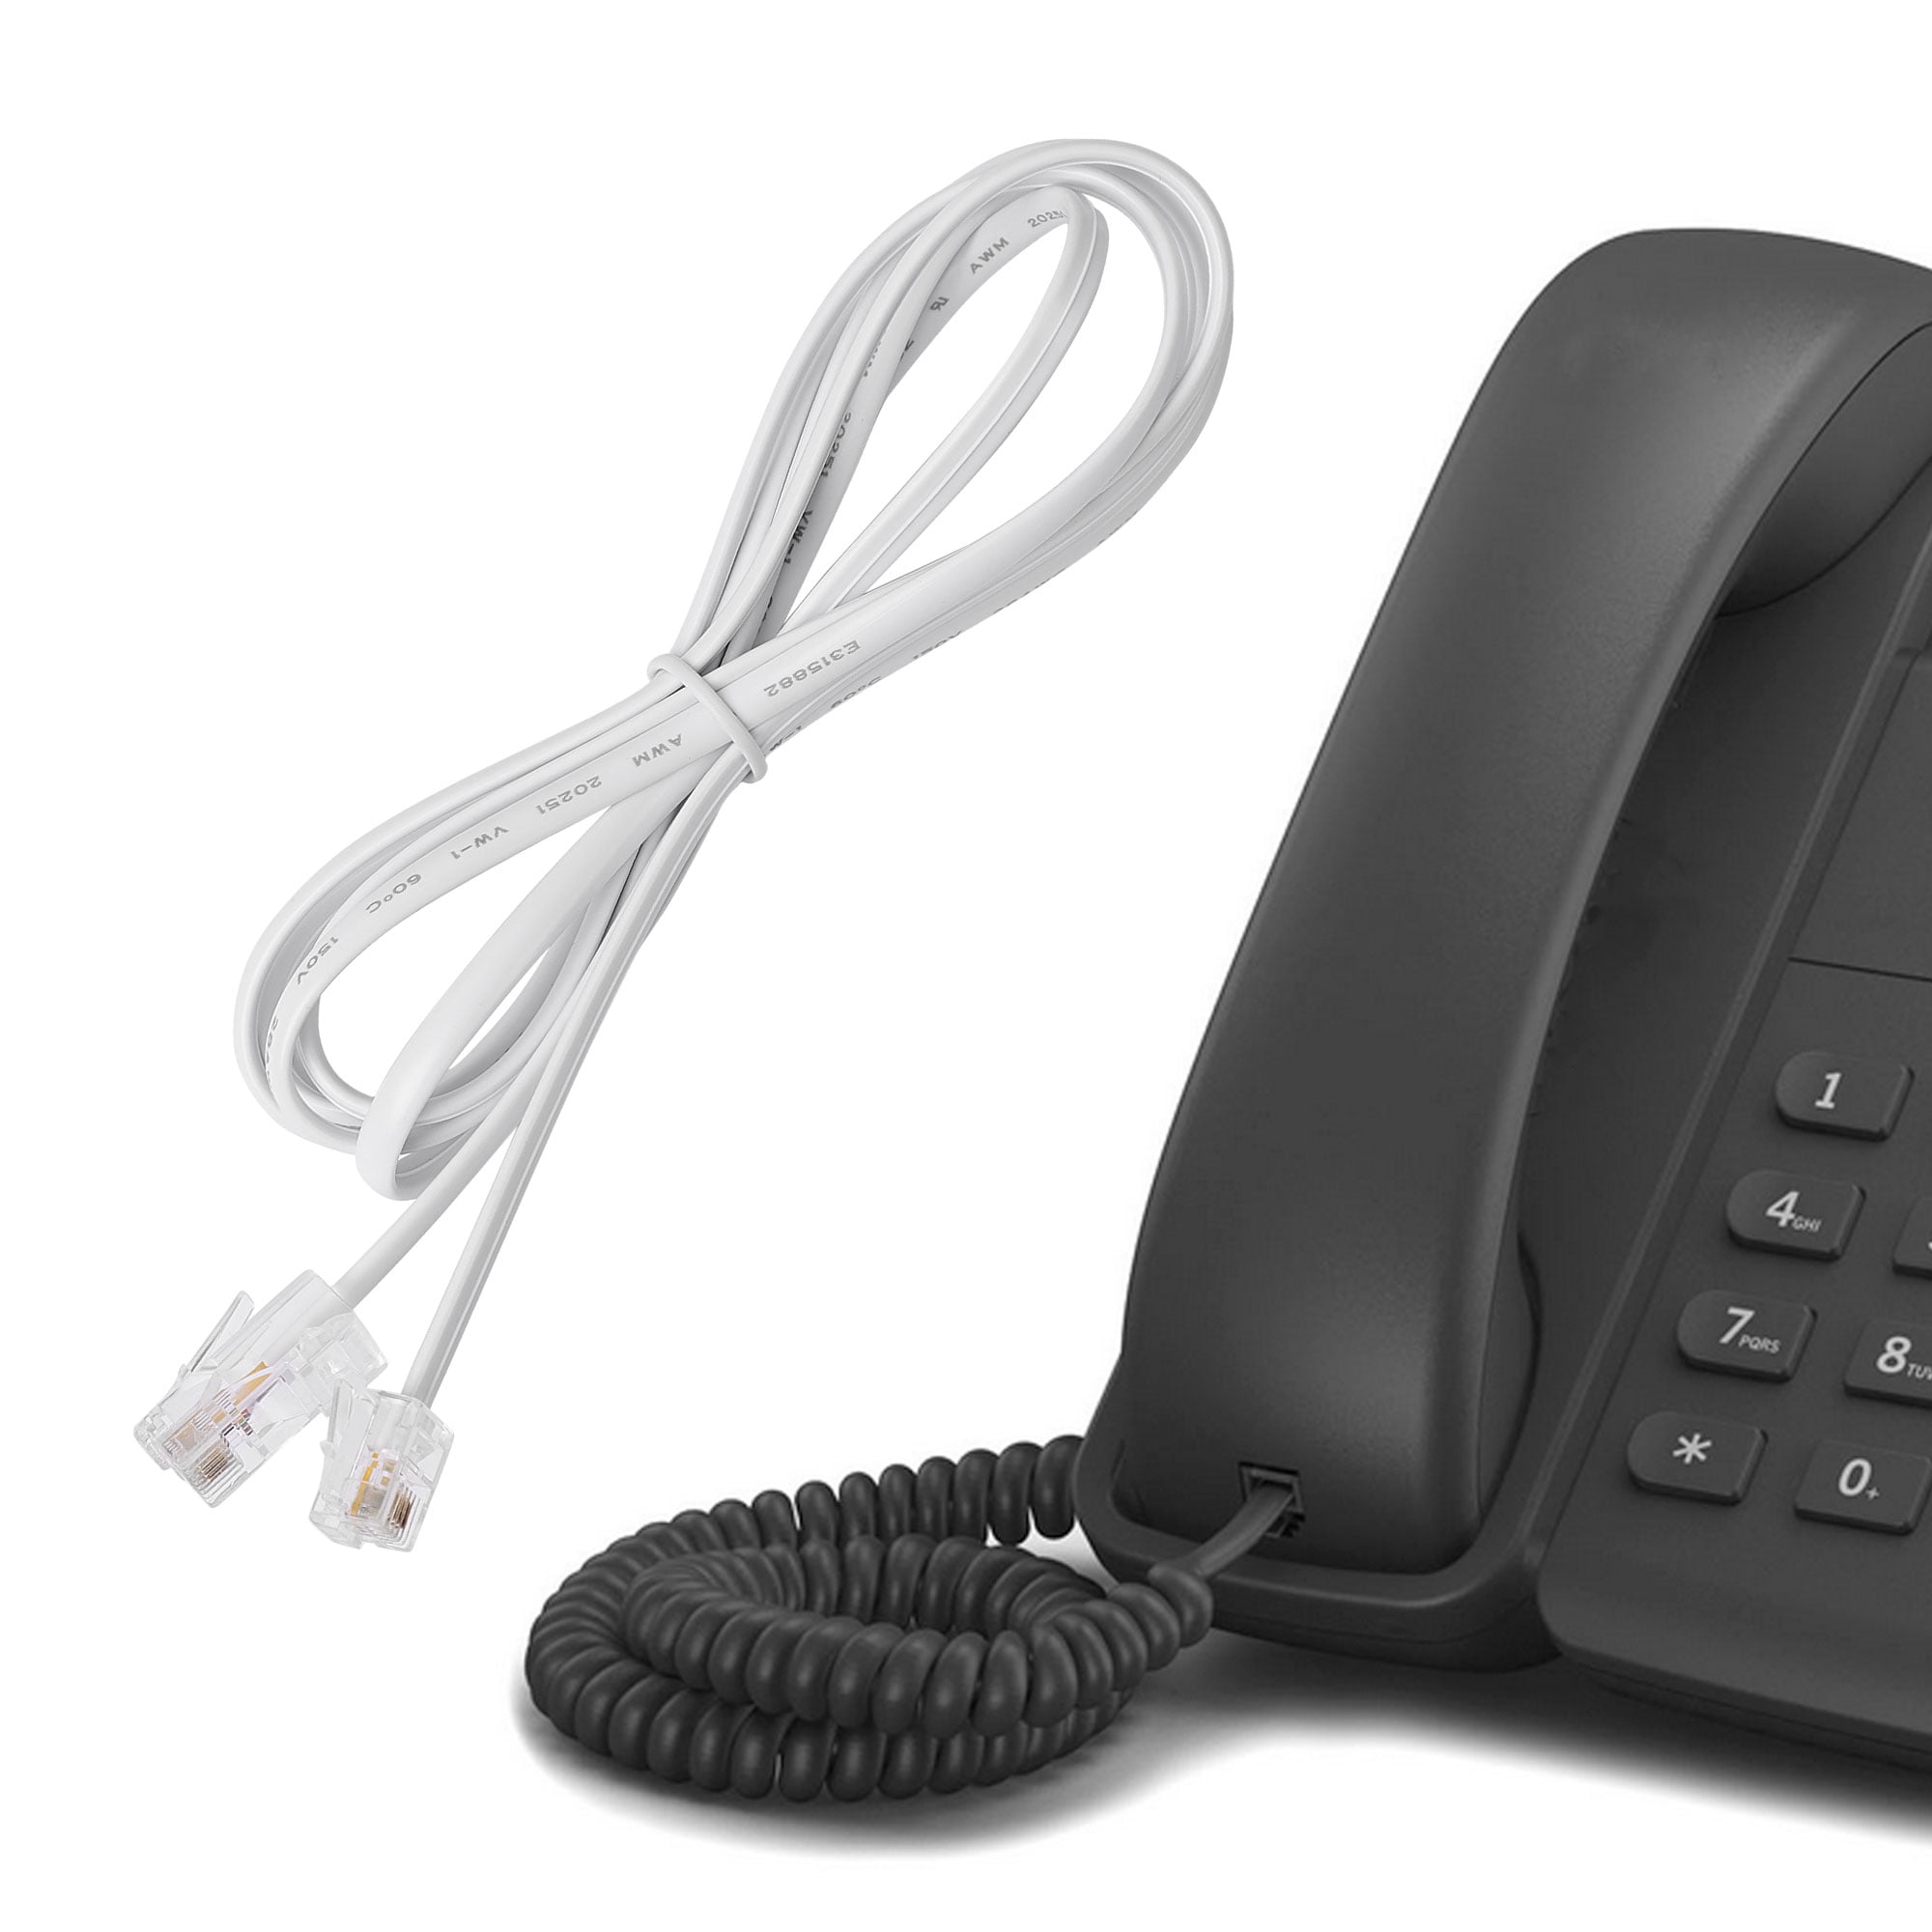 Keple 1m RJ11 to RJ45 Cable Phone Telephone Cord RJ11 6P4C to RJ45 8P8C  Connector Plug Cable for Landline Telephone (Black)